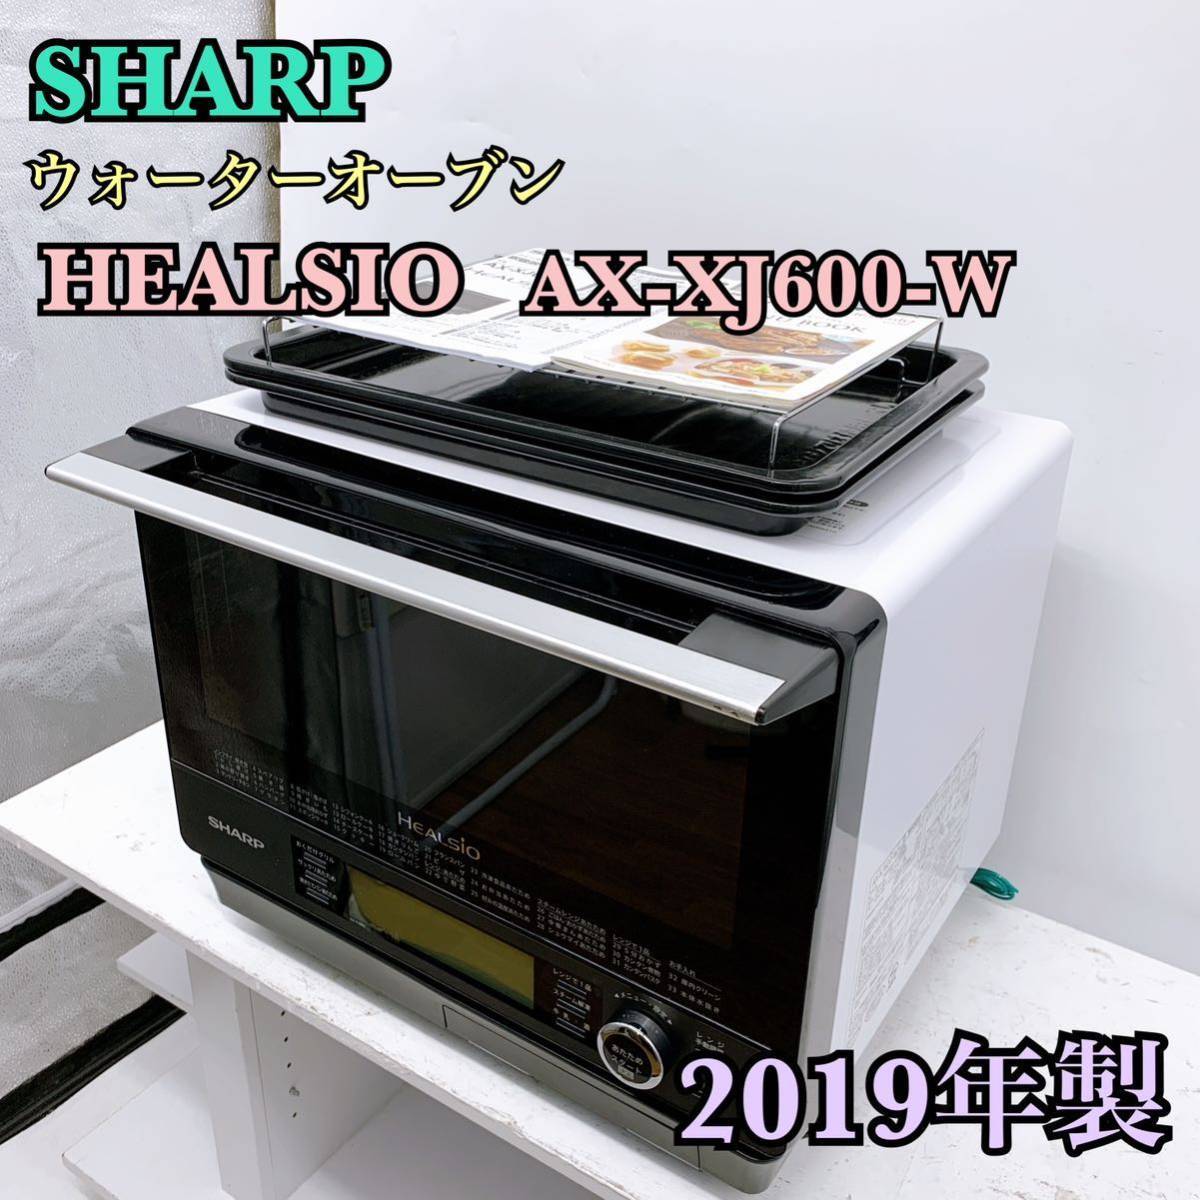 SHARP ヘルシオ ウォーターオーブン レンジ AX-XJ600-W-